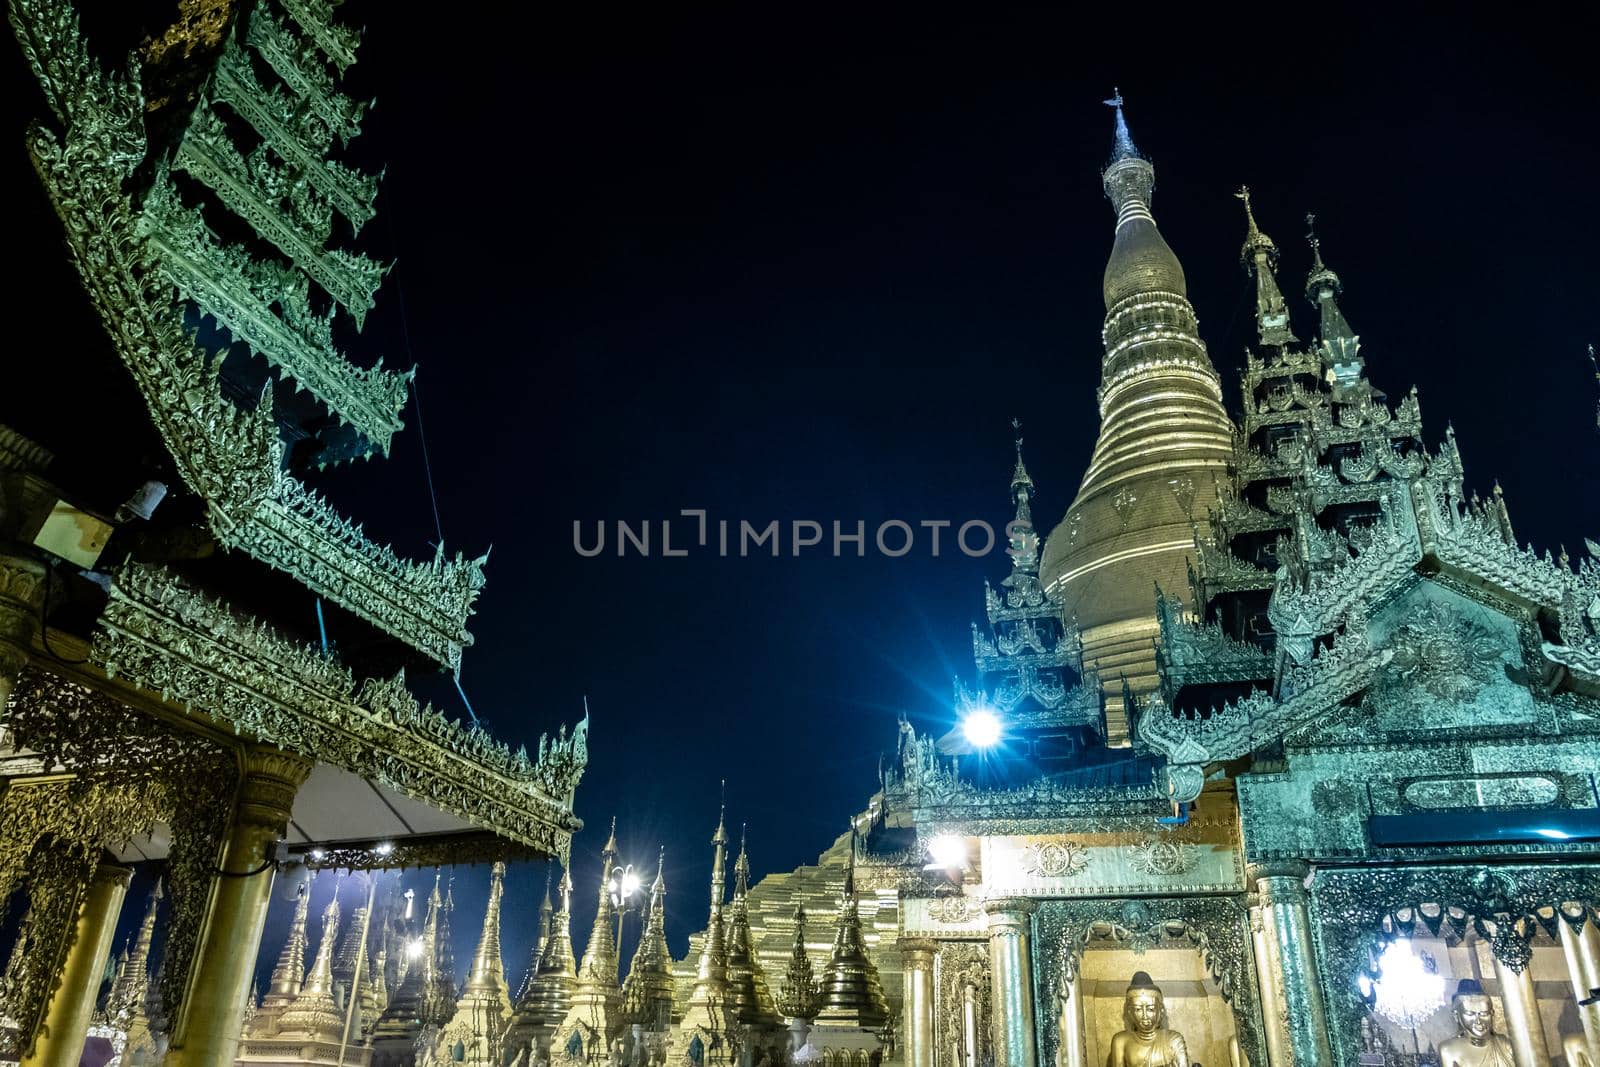 Night view of Shwedagon Pagoda, a gilded stupa located in Yangon, Myanmar